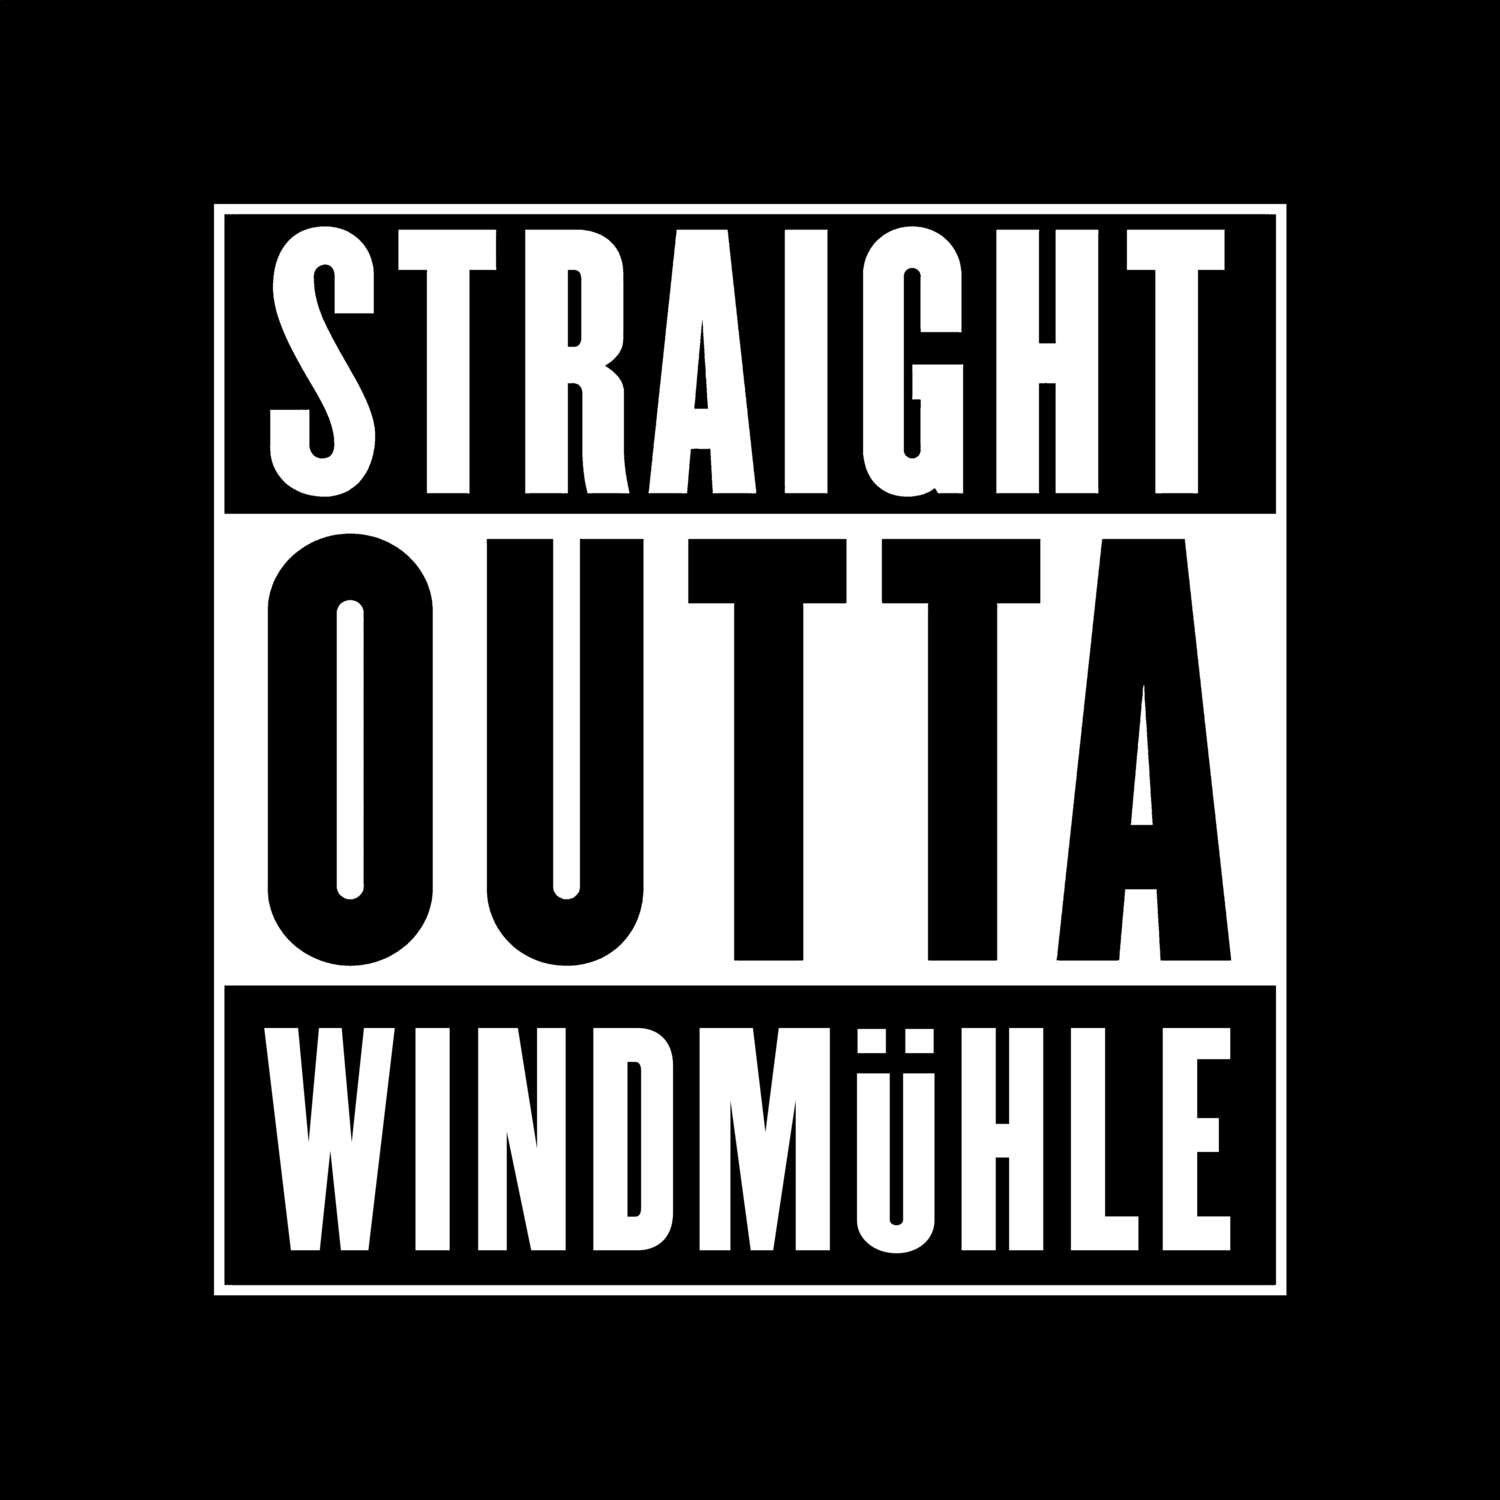 Windmühle T-Shirt »Straight Outta«